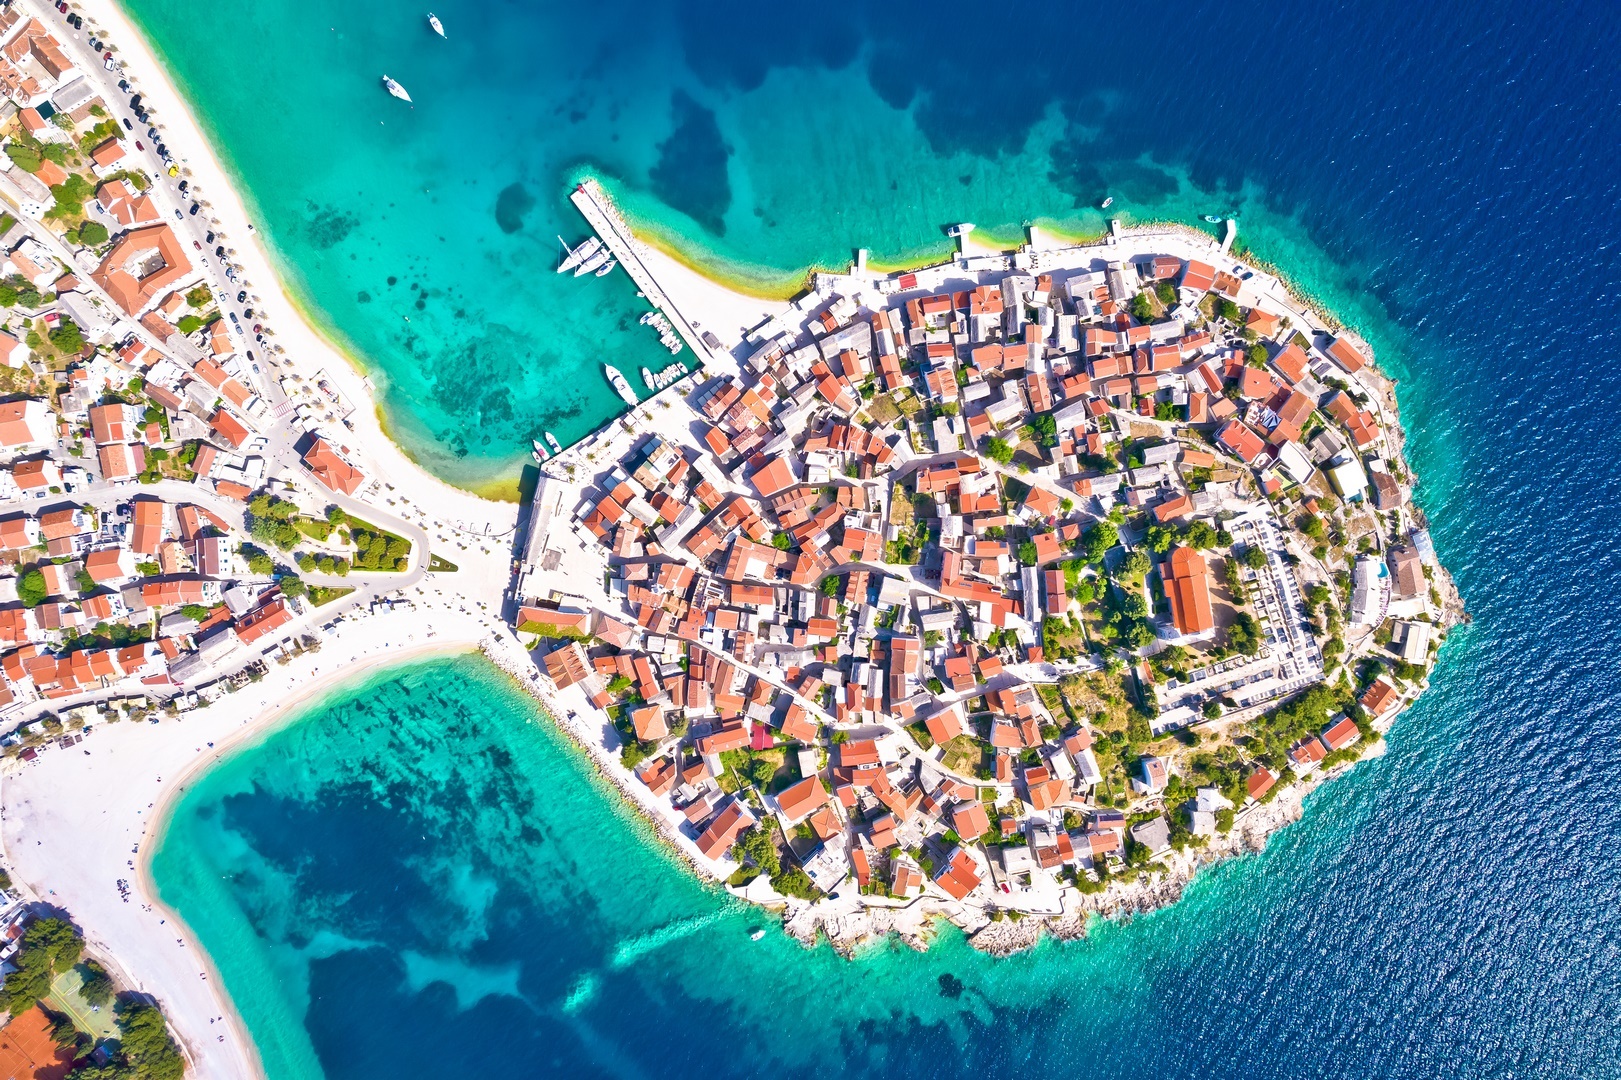 Marina in Croatia